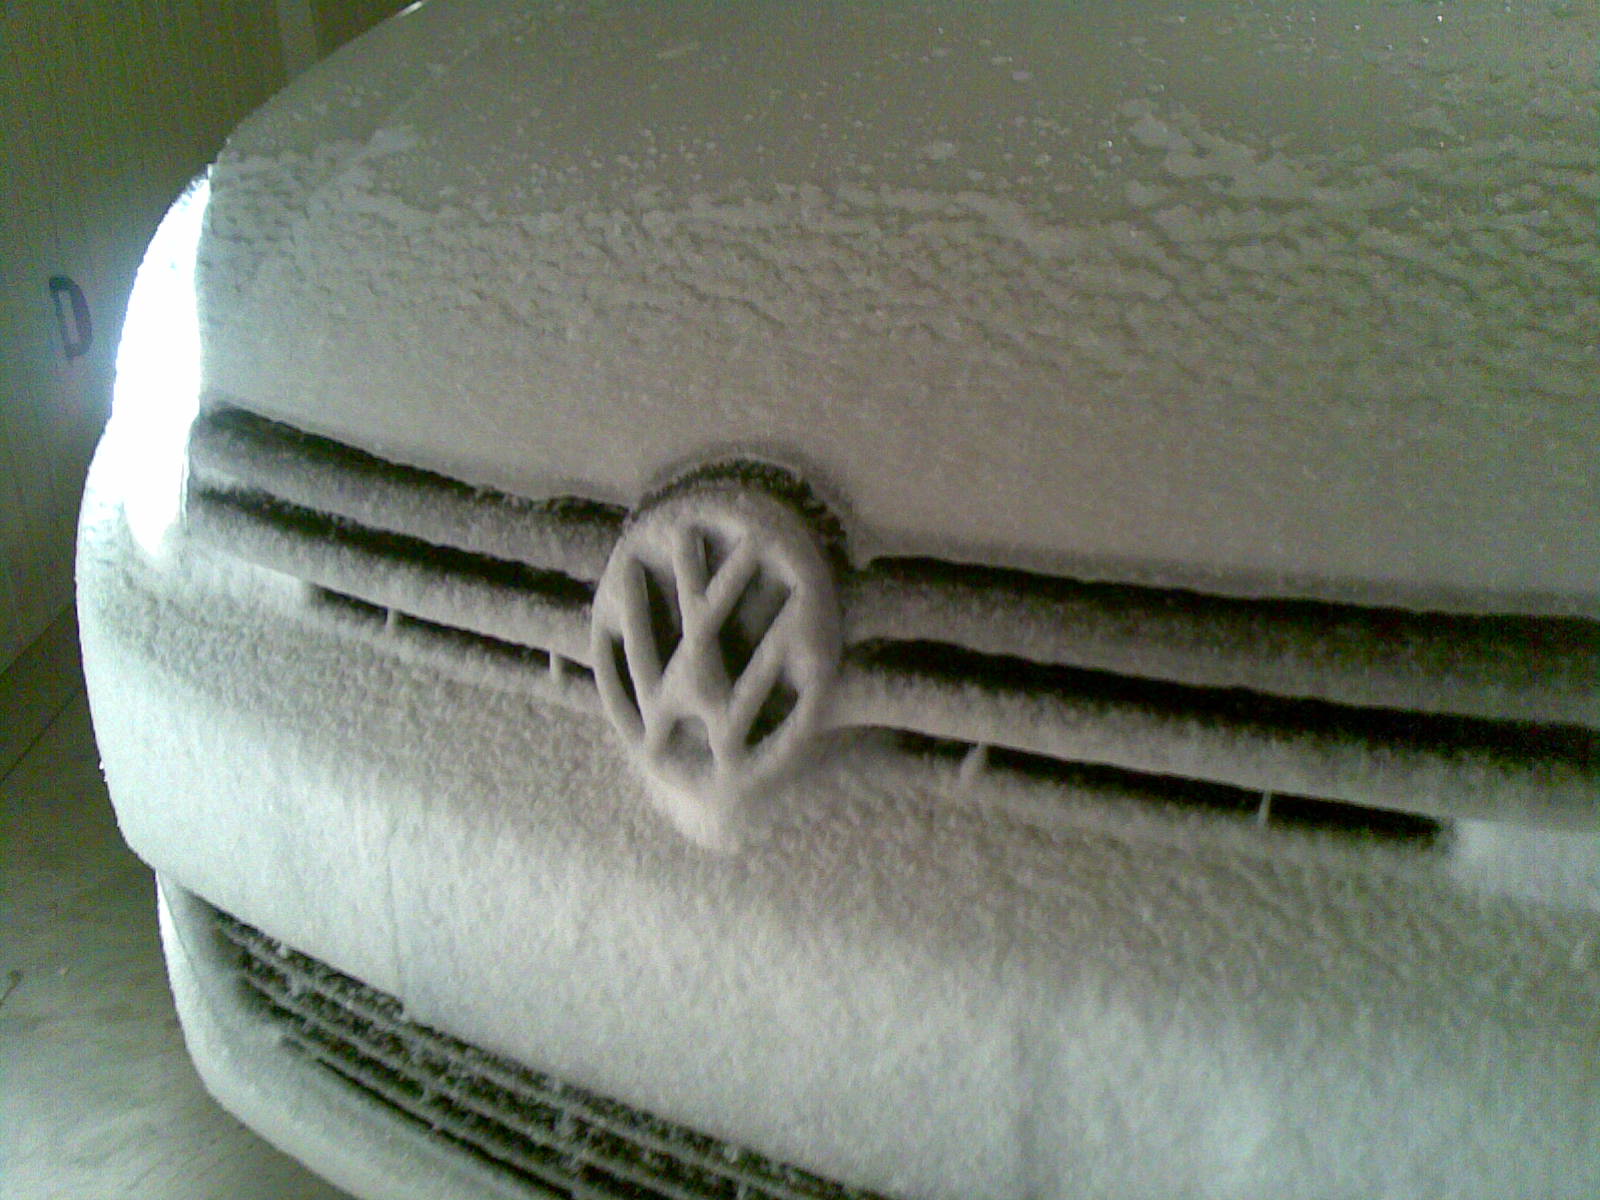 snow golf
dopo snow leopard ecco snow golf!!!........
Keywords: neve